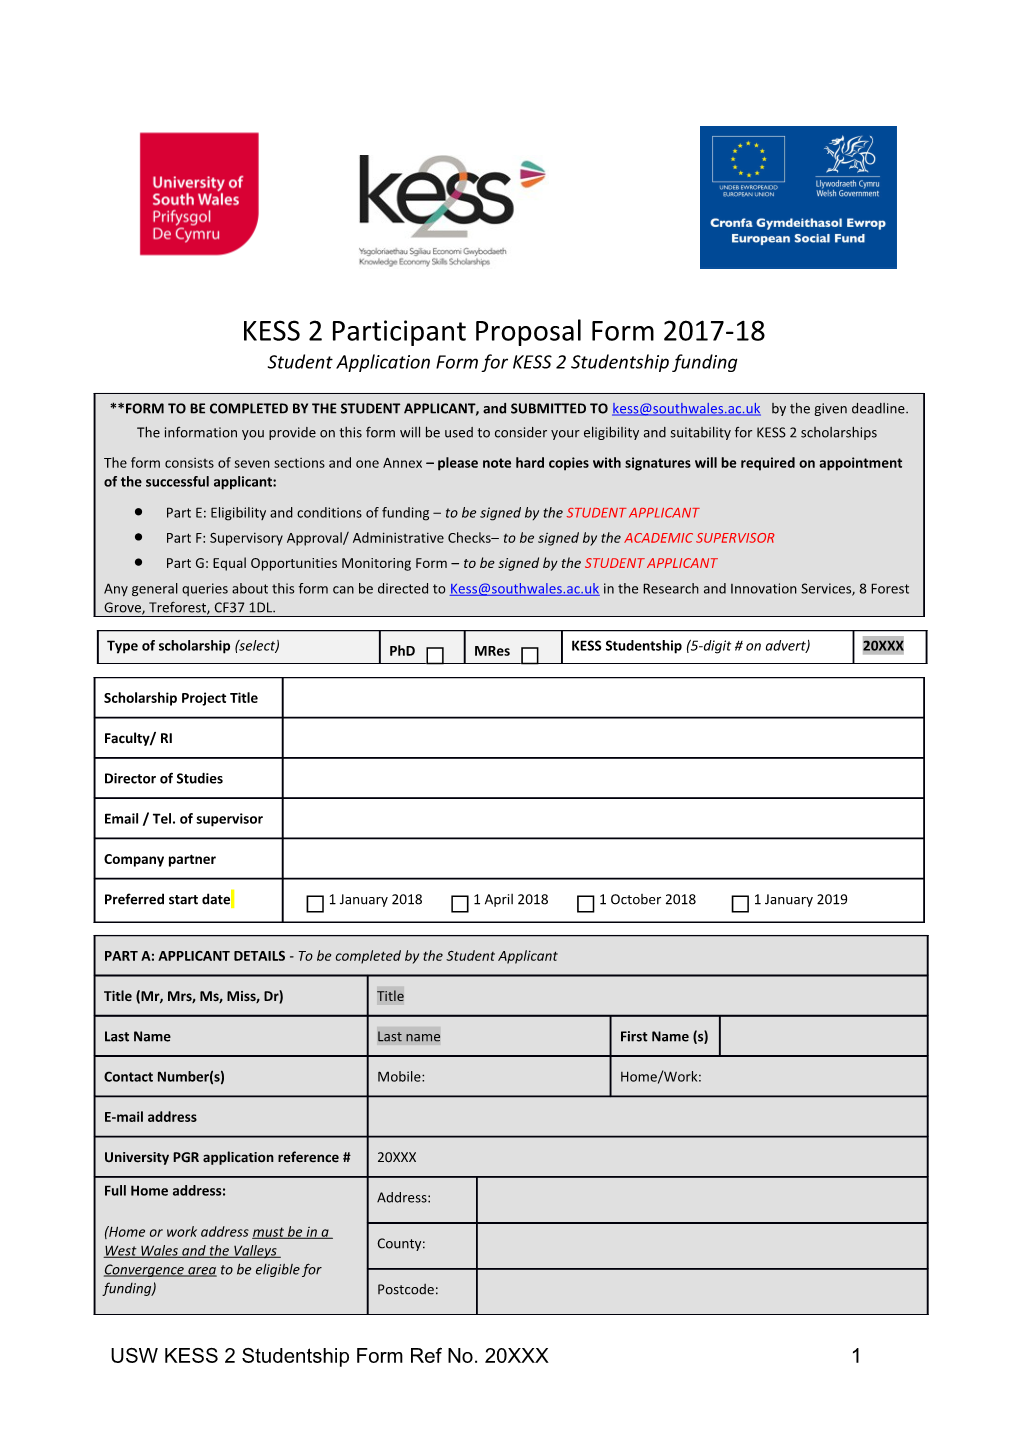 KESS 2 Student Application Form 2017/18